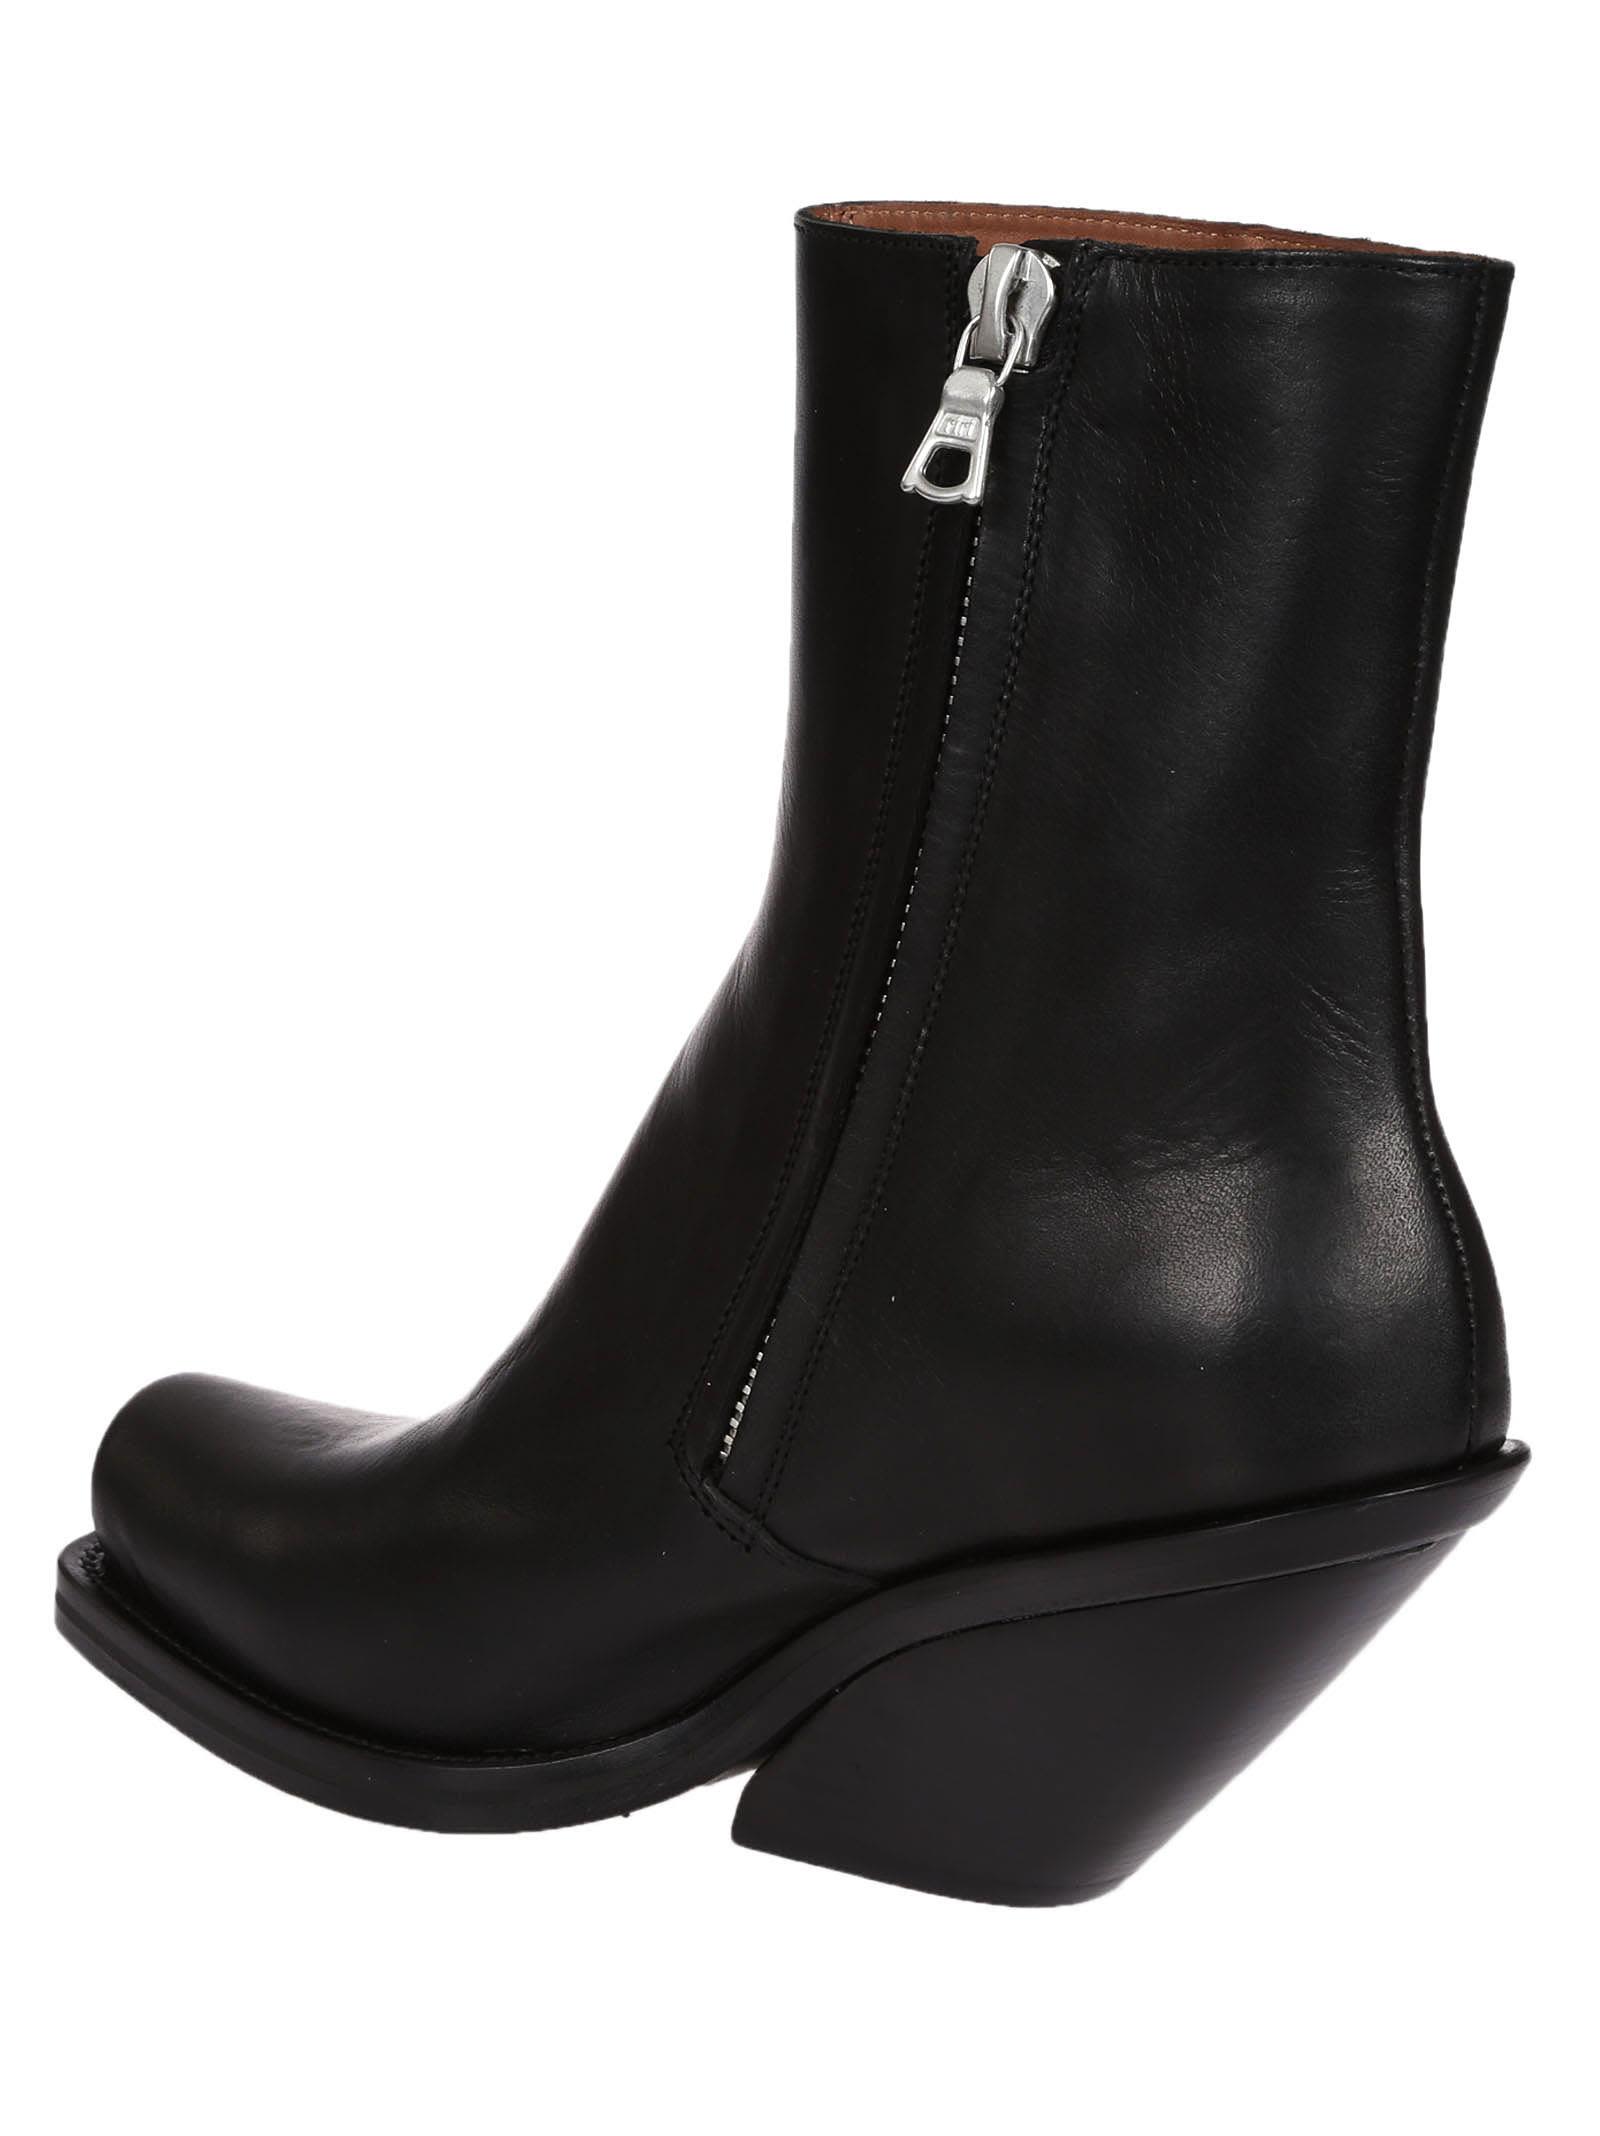 VETEMENTS - Vetements Zipped Boots - Black, Women's Boots | Italist